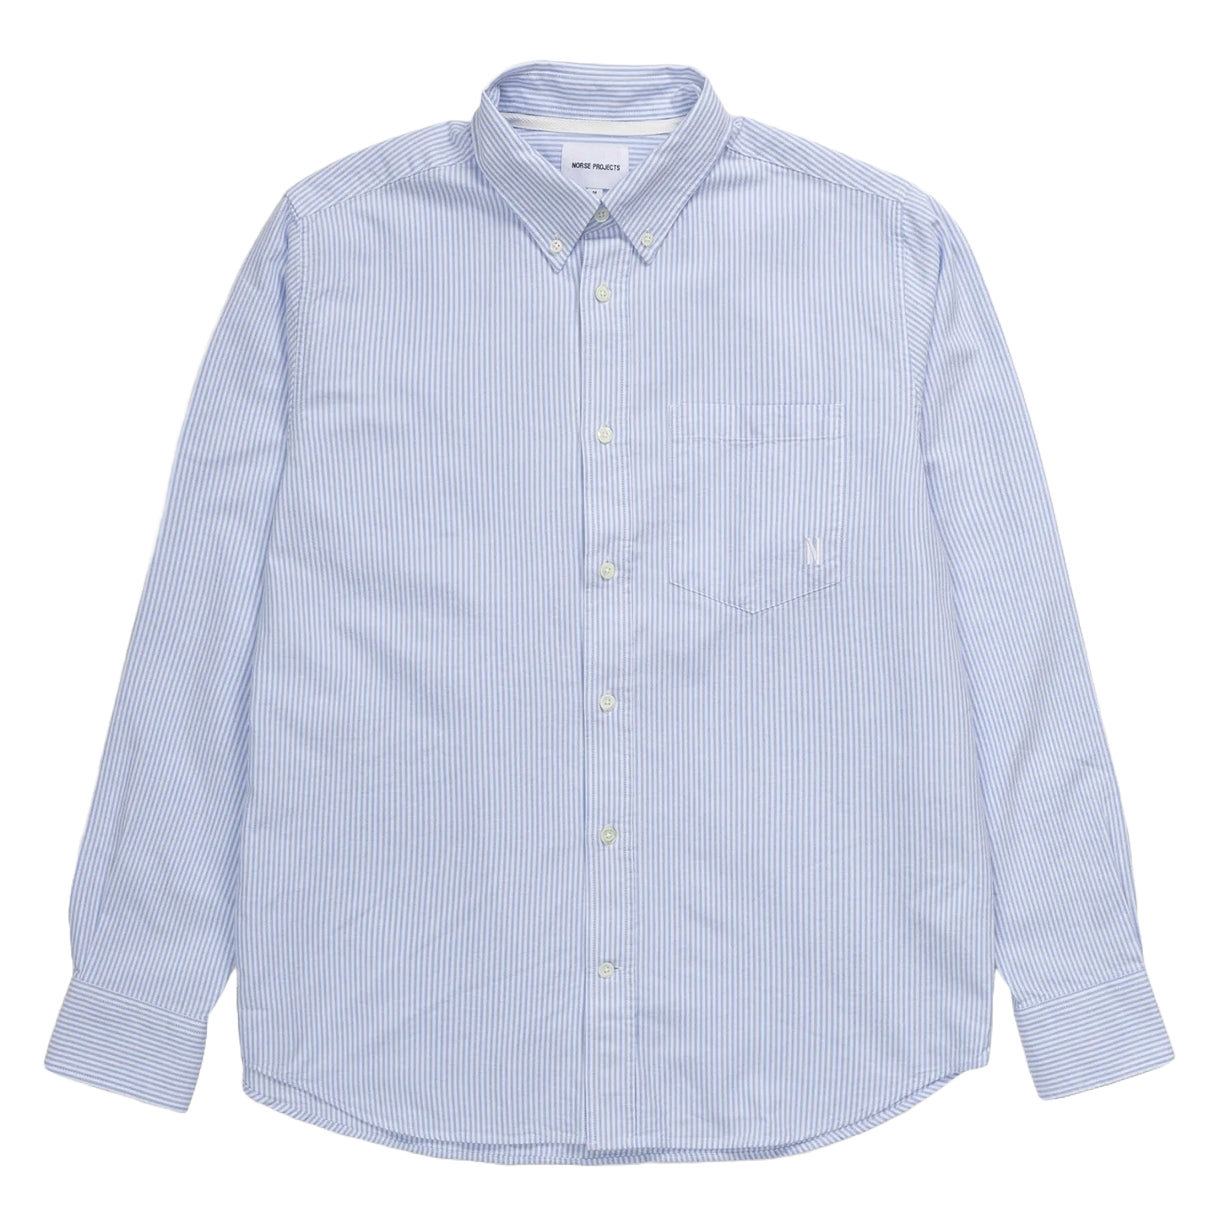 Algot Oxford Monogram Shirt - Blue Stripe